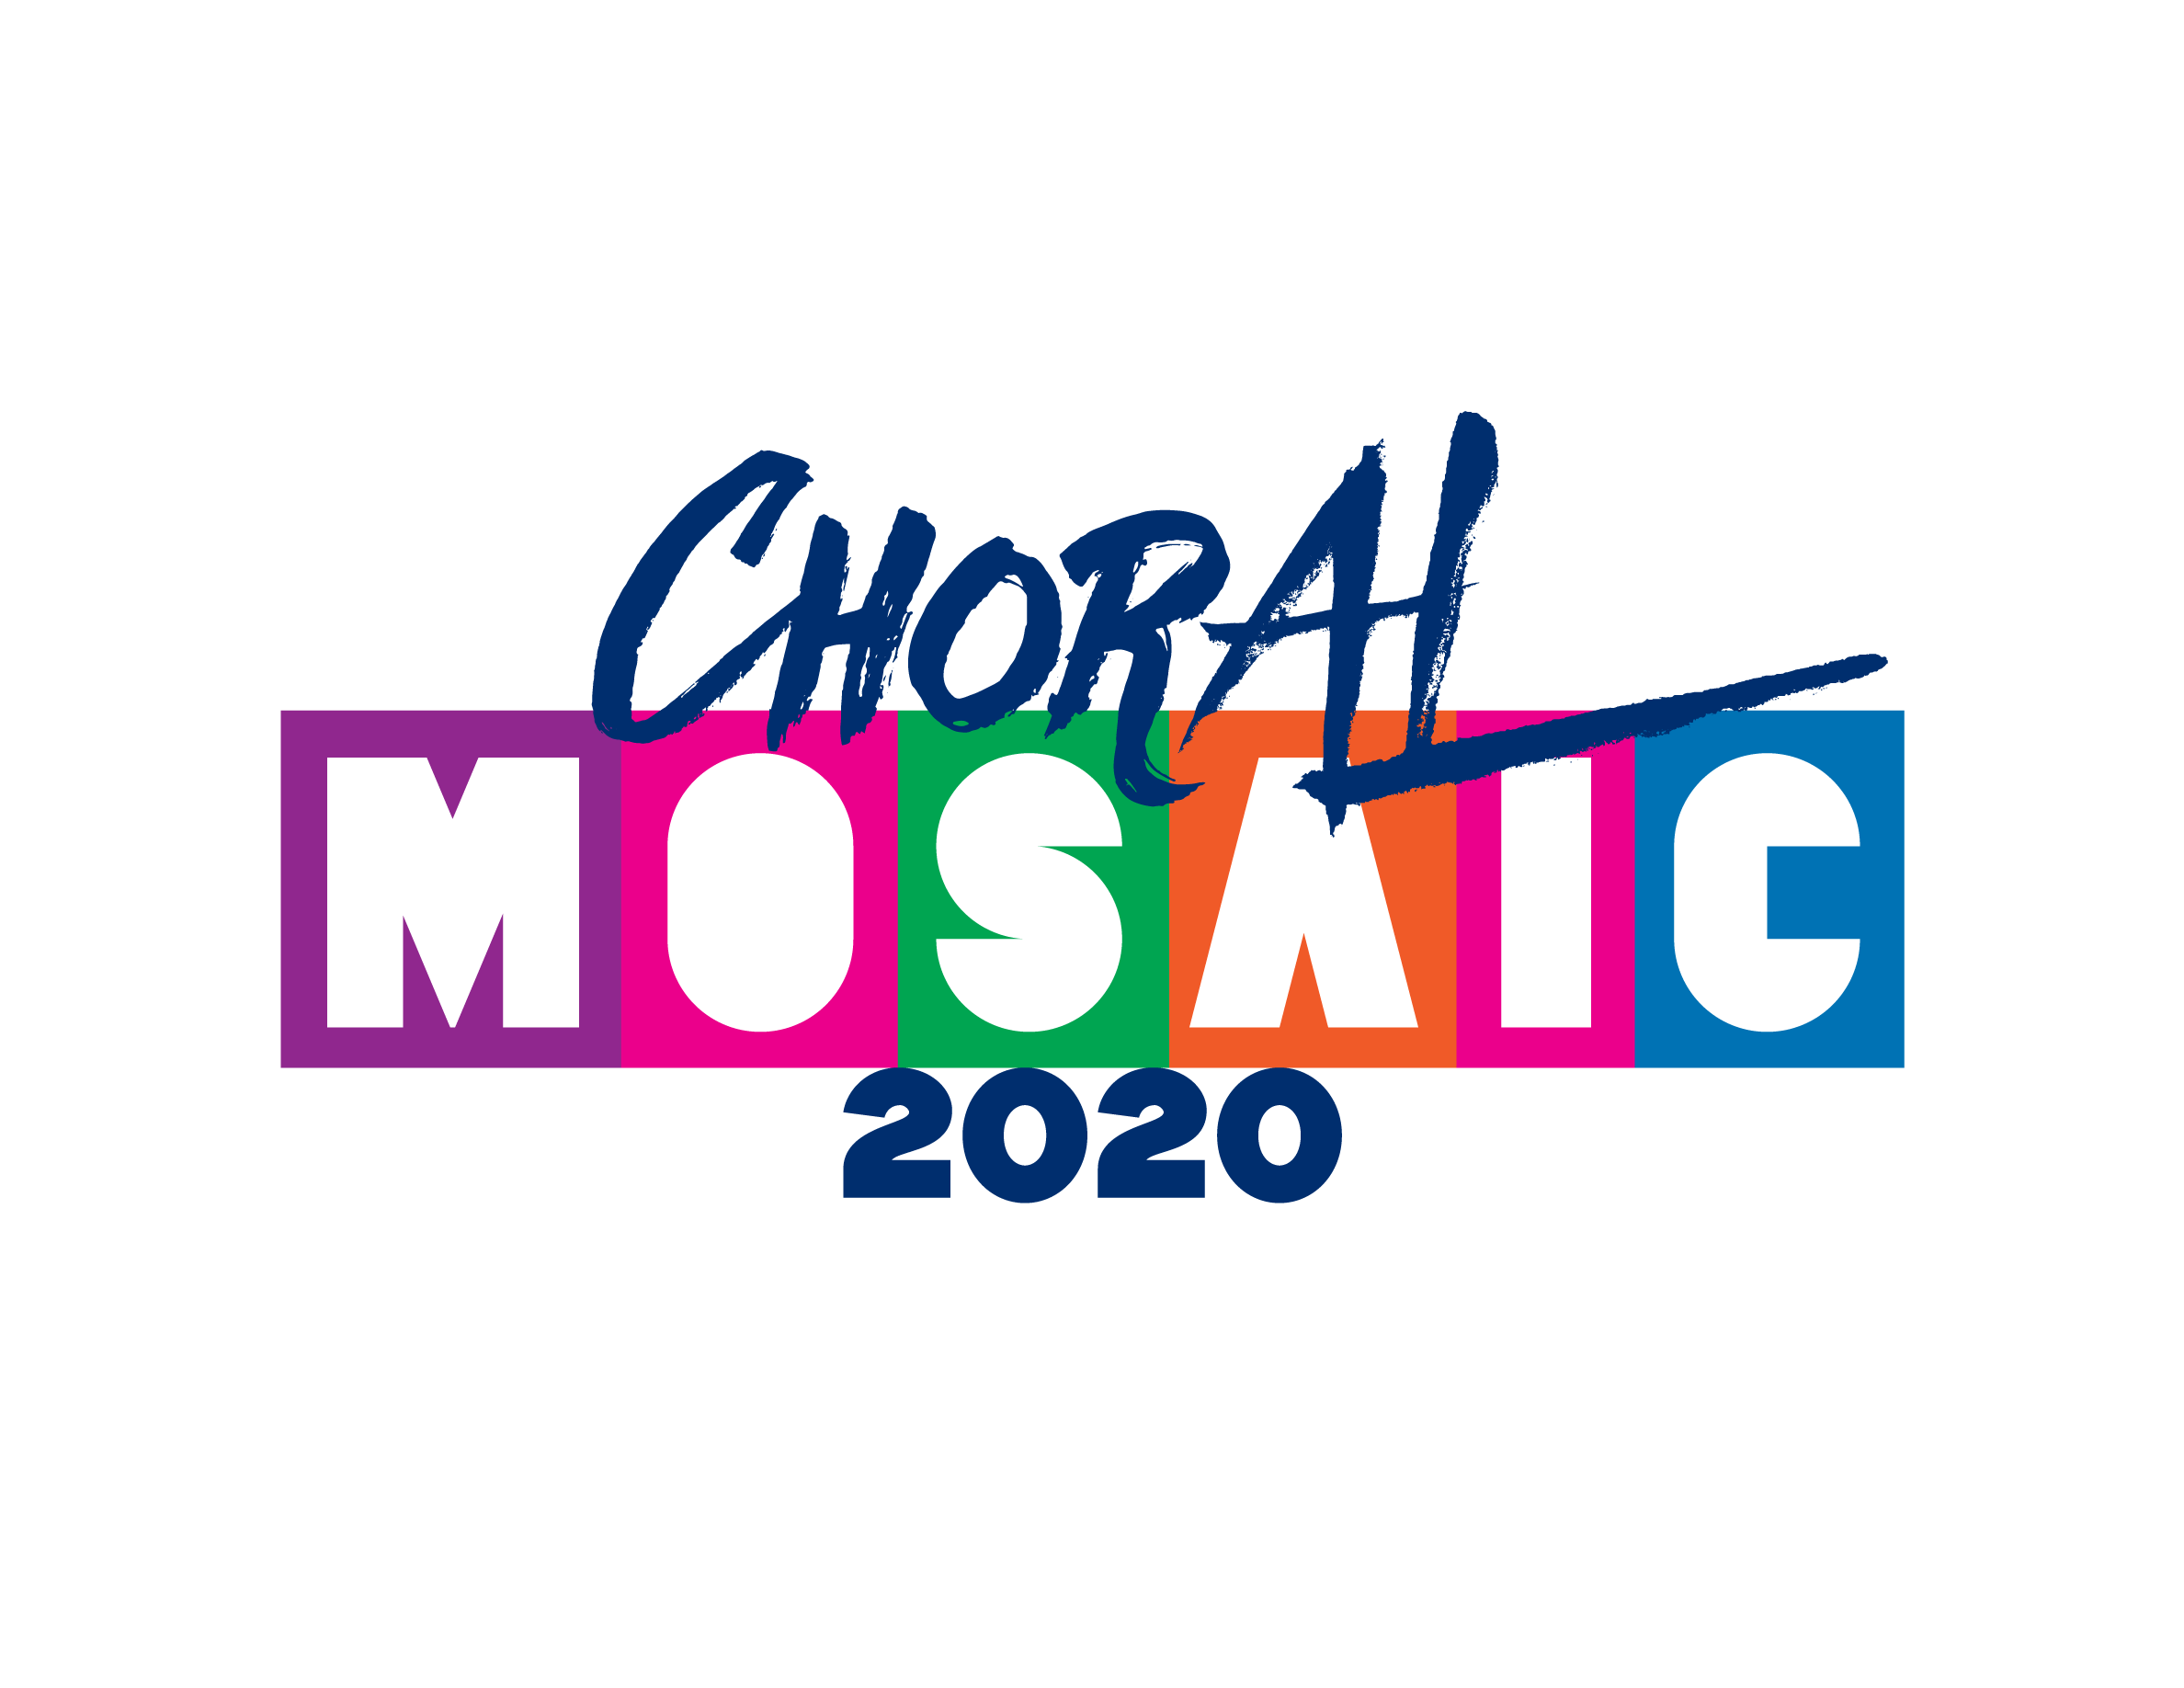 Choral Mosaic 2020